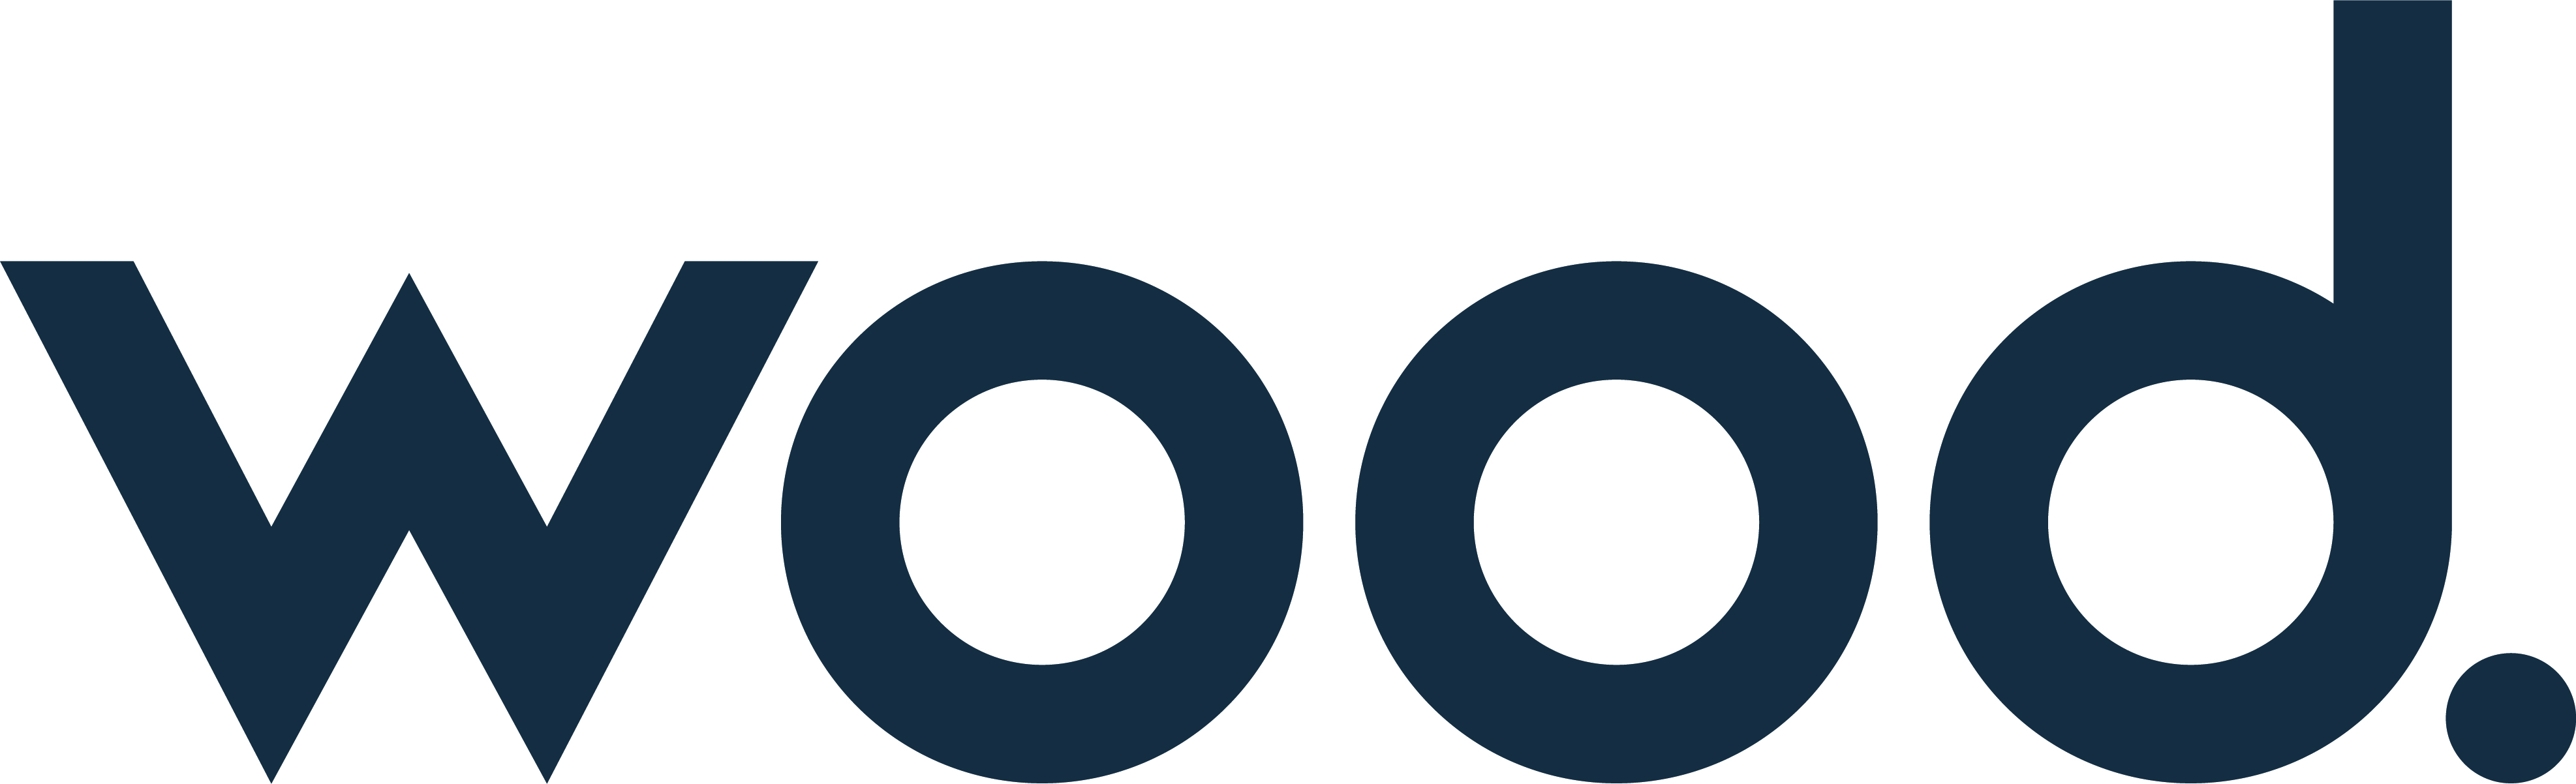 Logo WOOD.